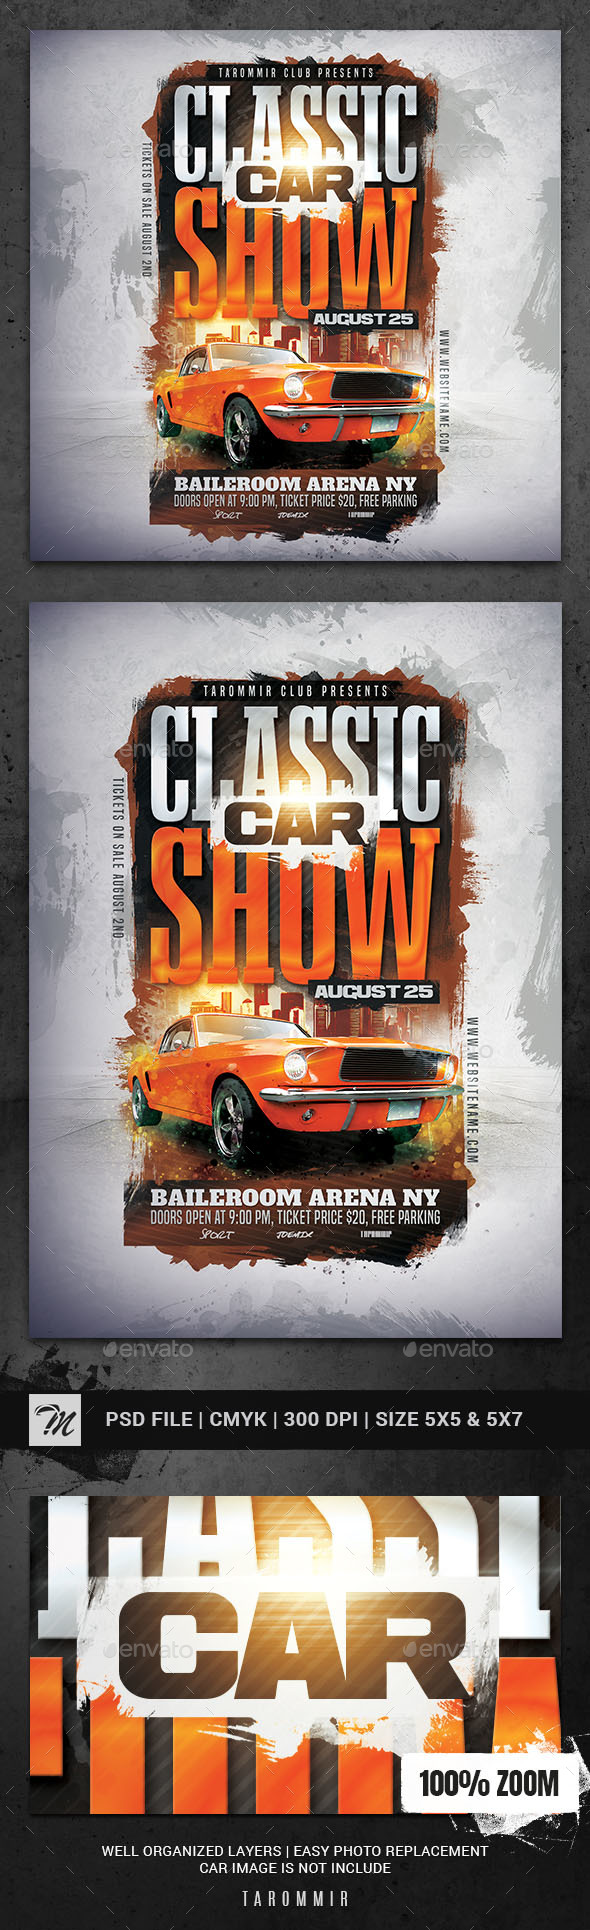 Classic Car Show Flyer